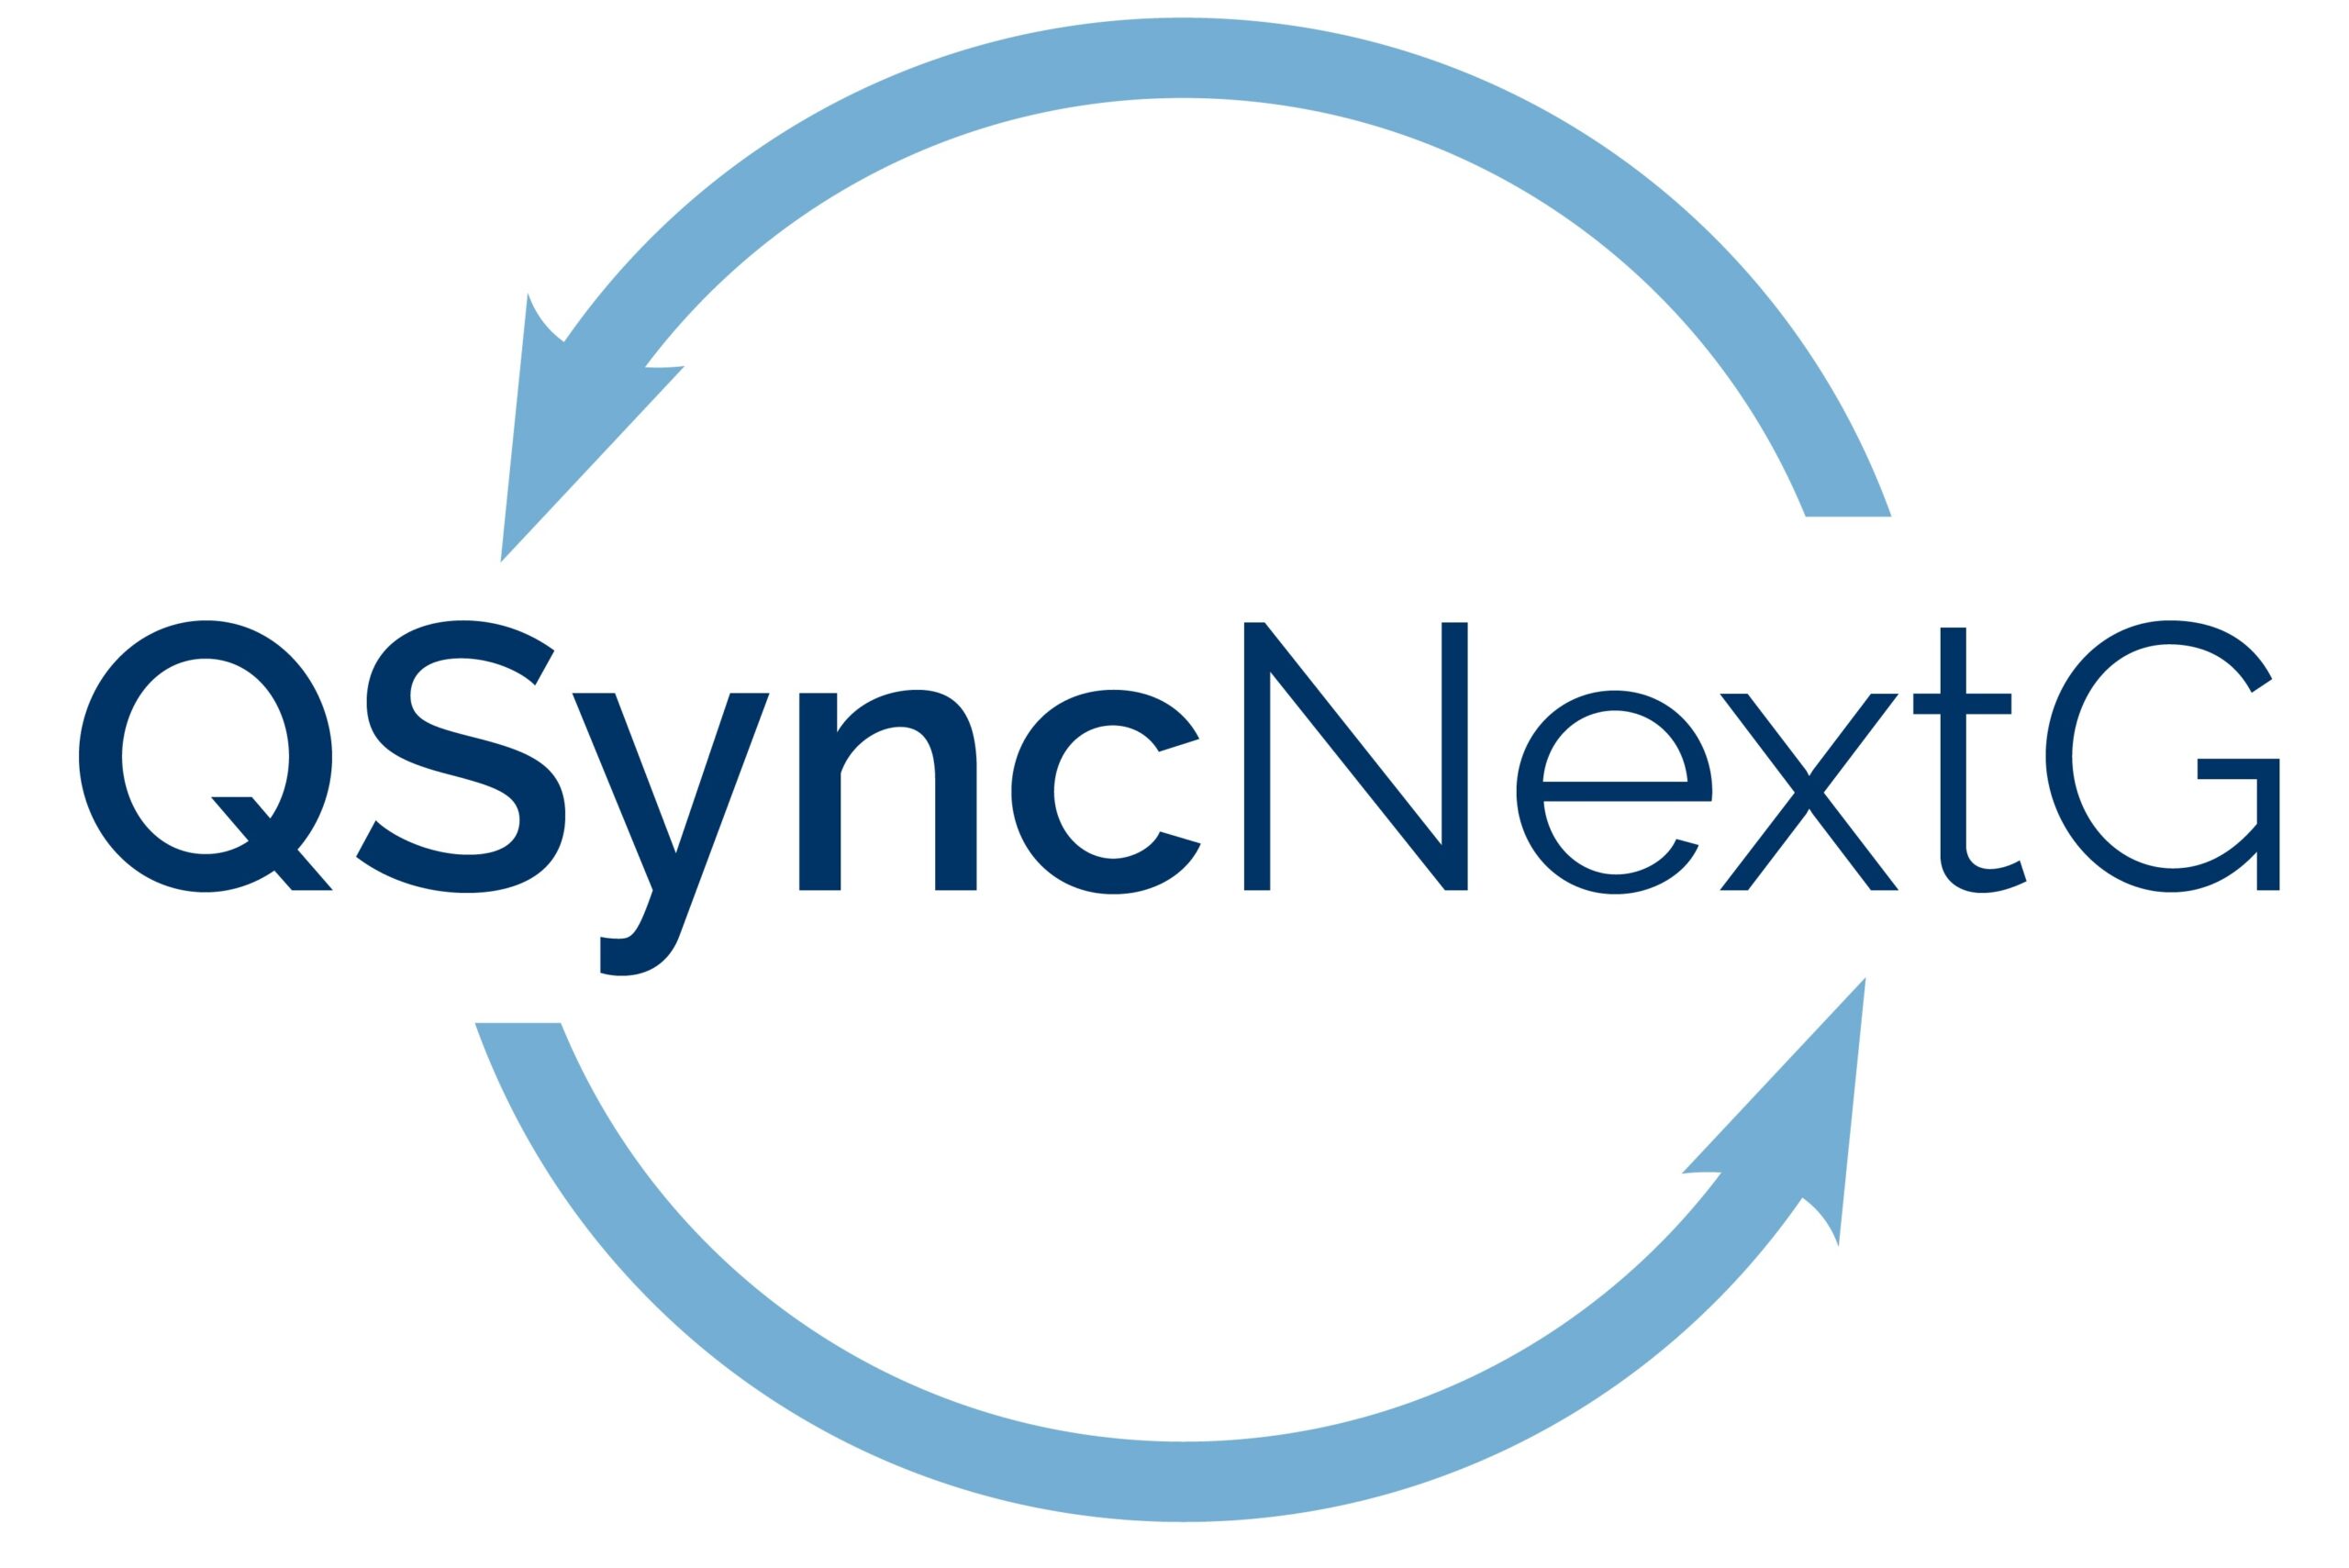 QSyncNextG logo